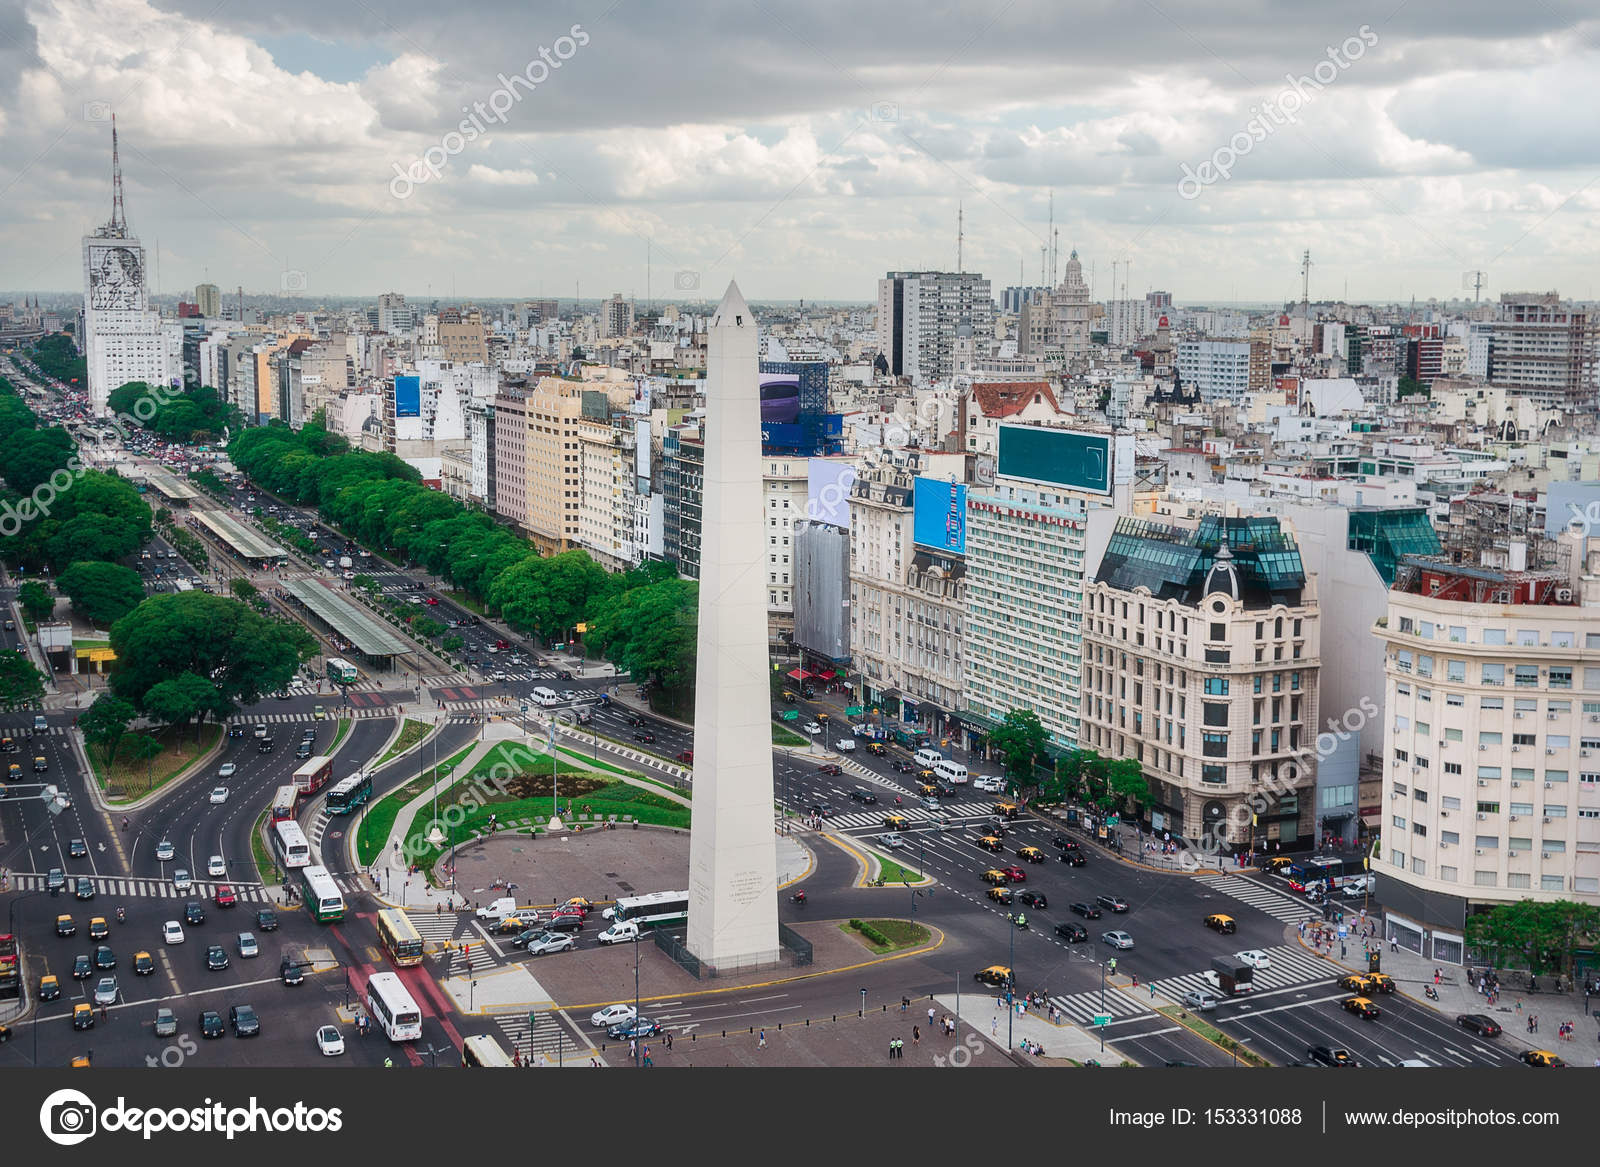 Fotos: argentina capital | La ciudad Capital de Buenos Aires en